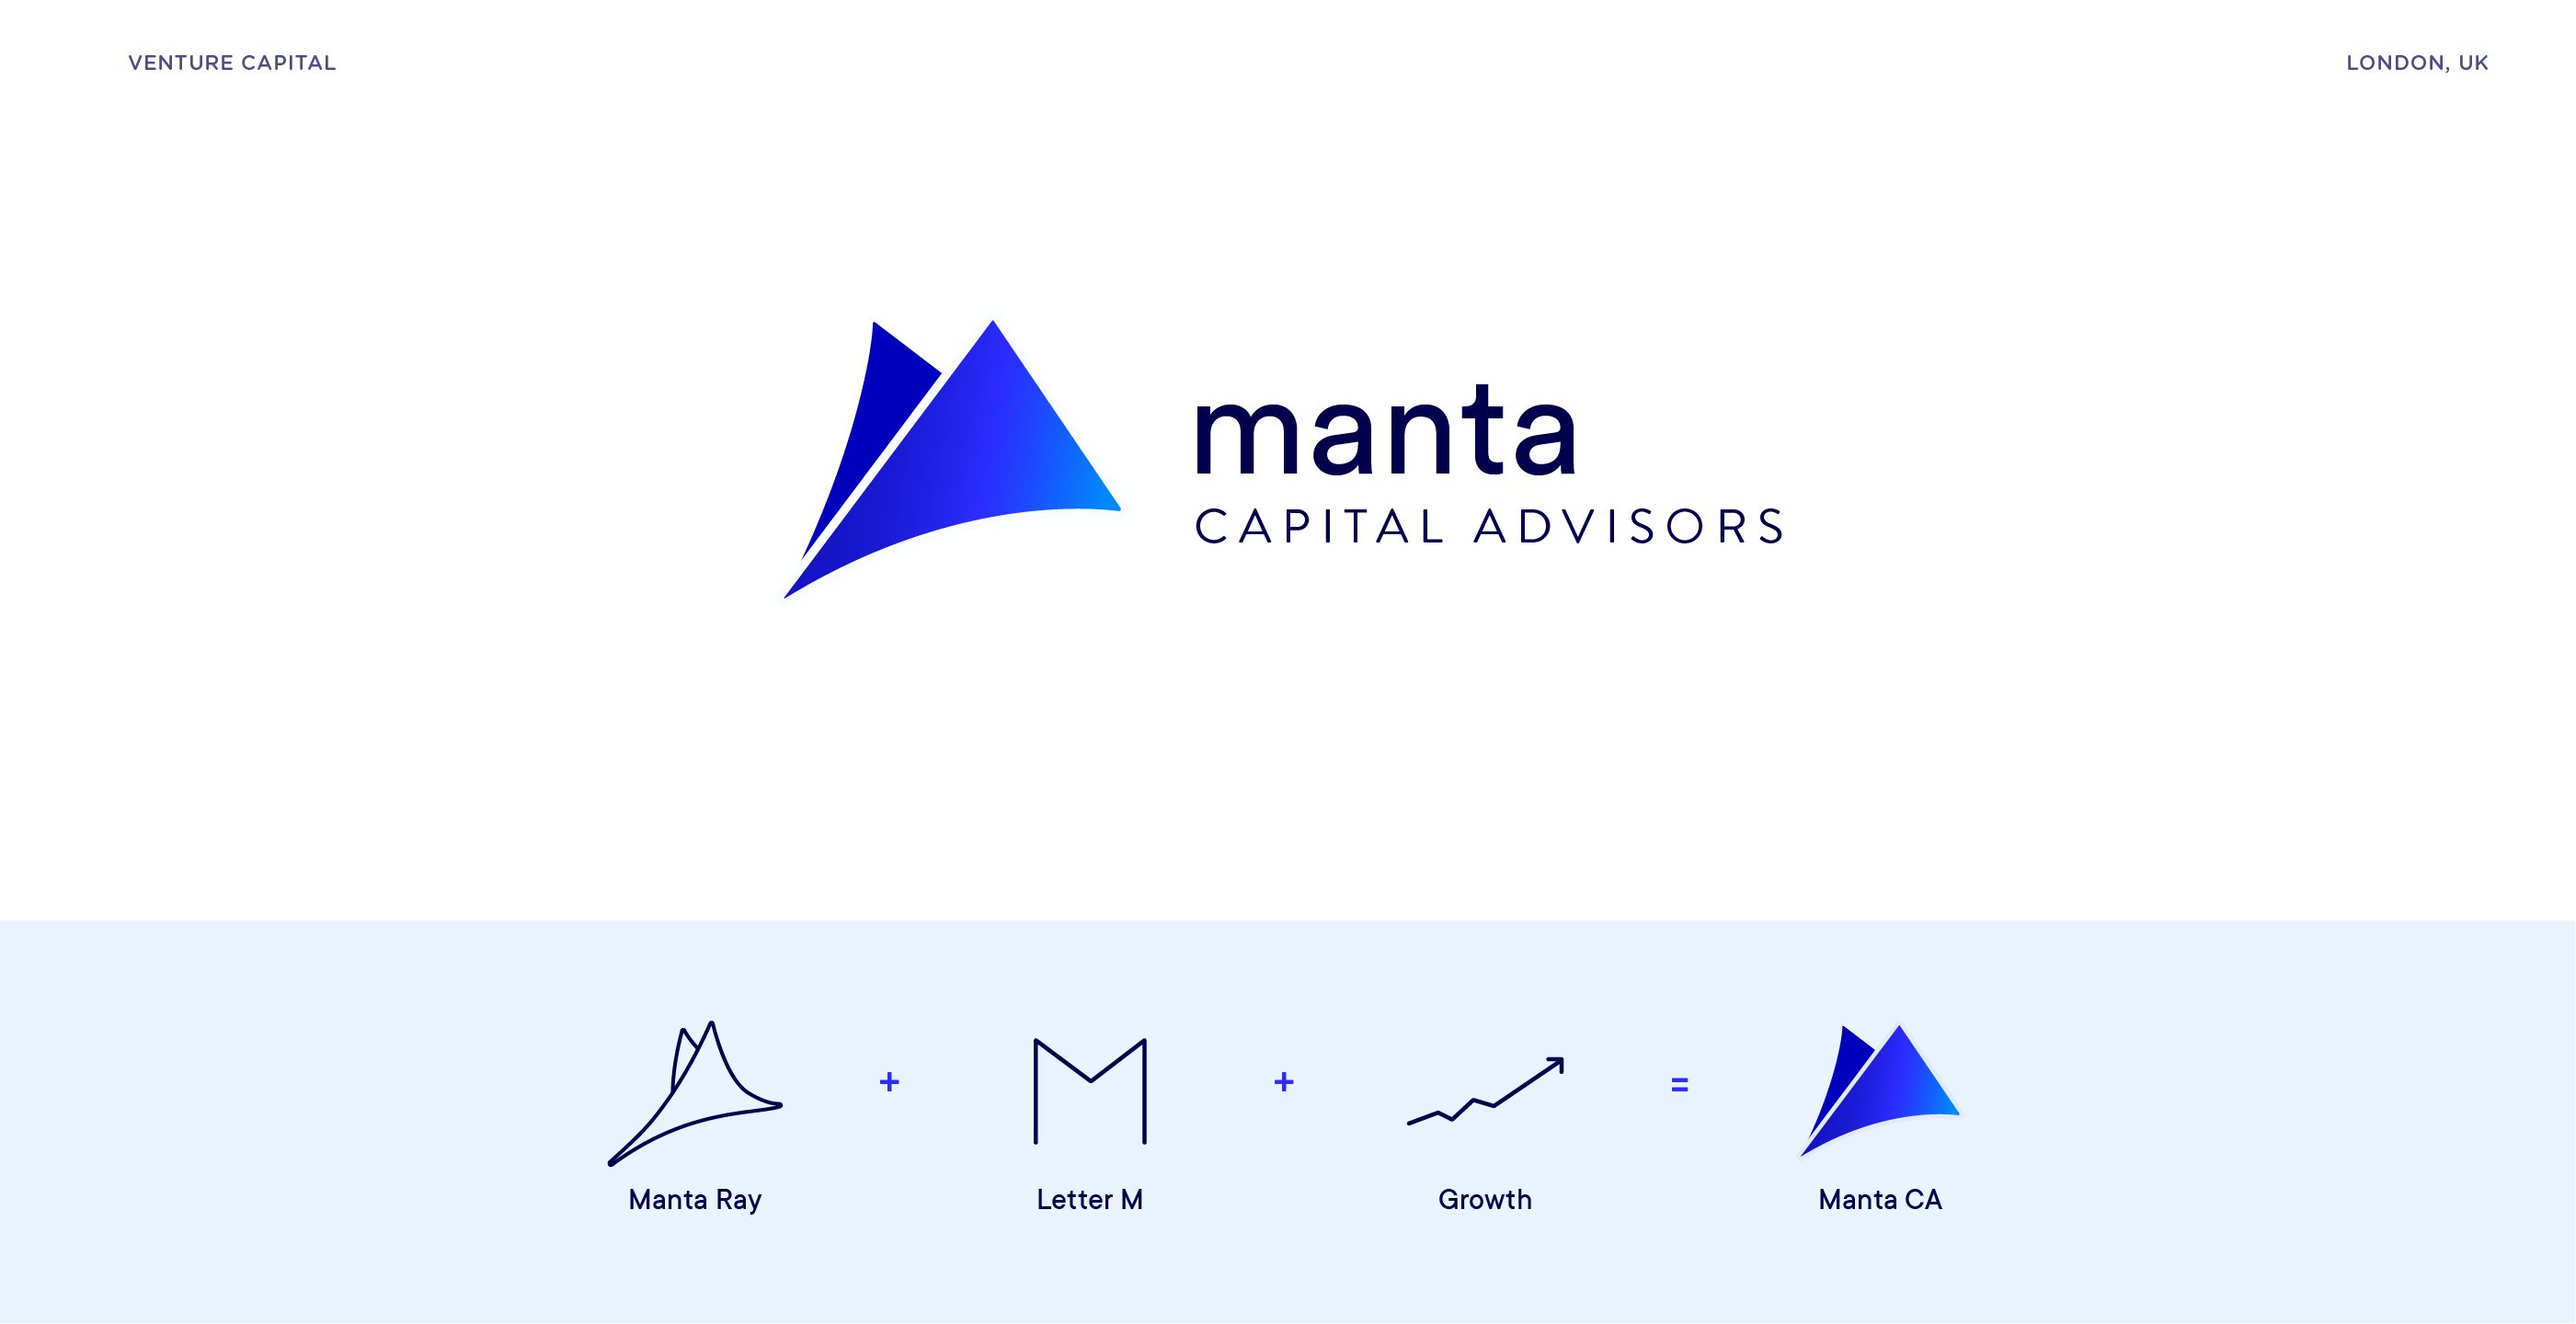 manta – capital advisors